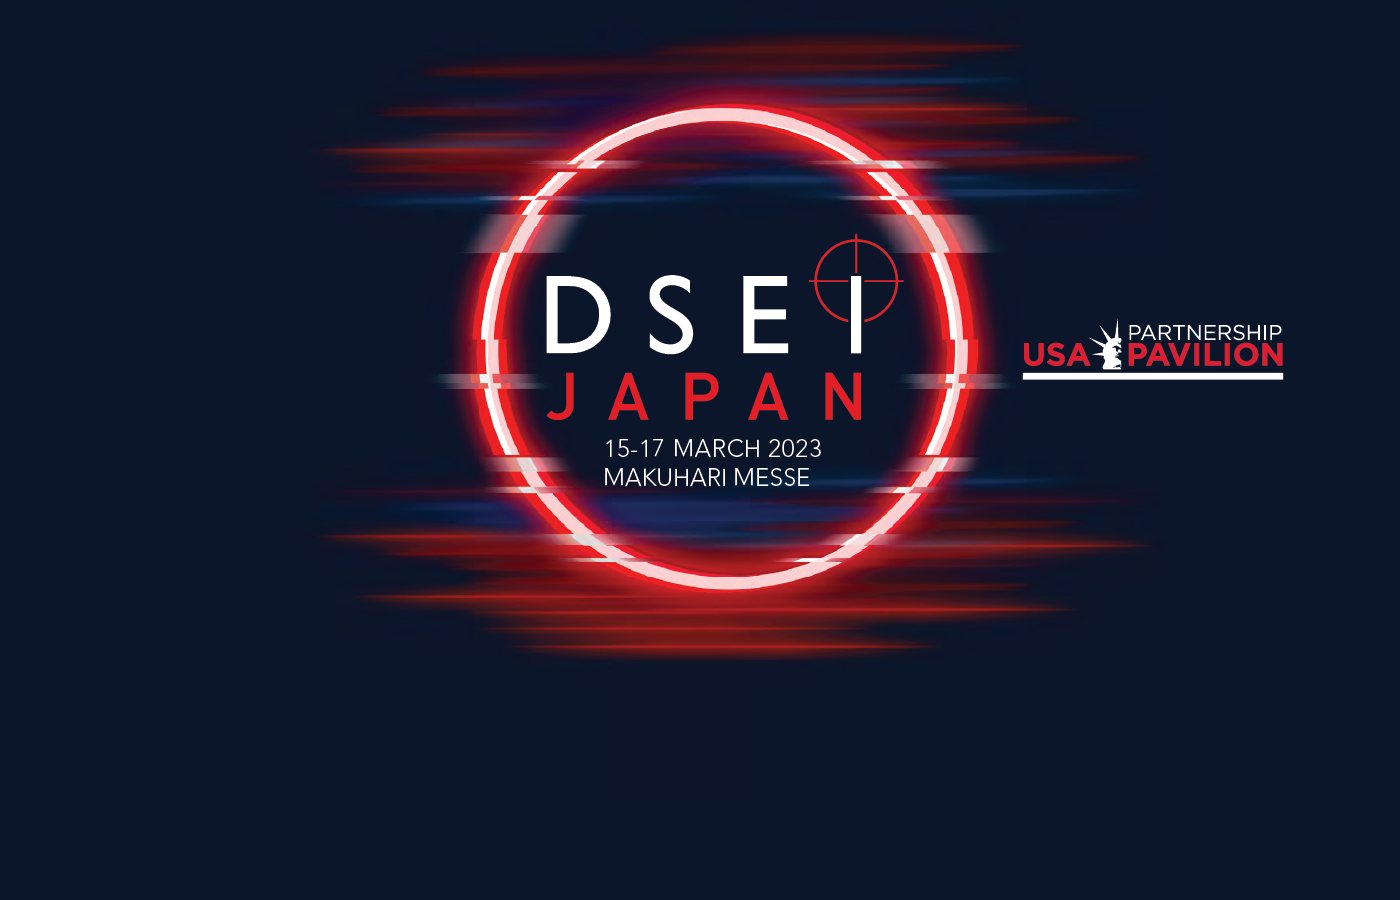 DSEI JAPAN 2023